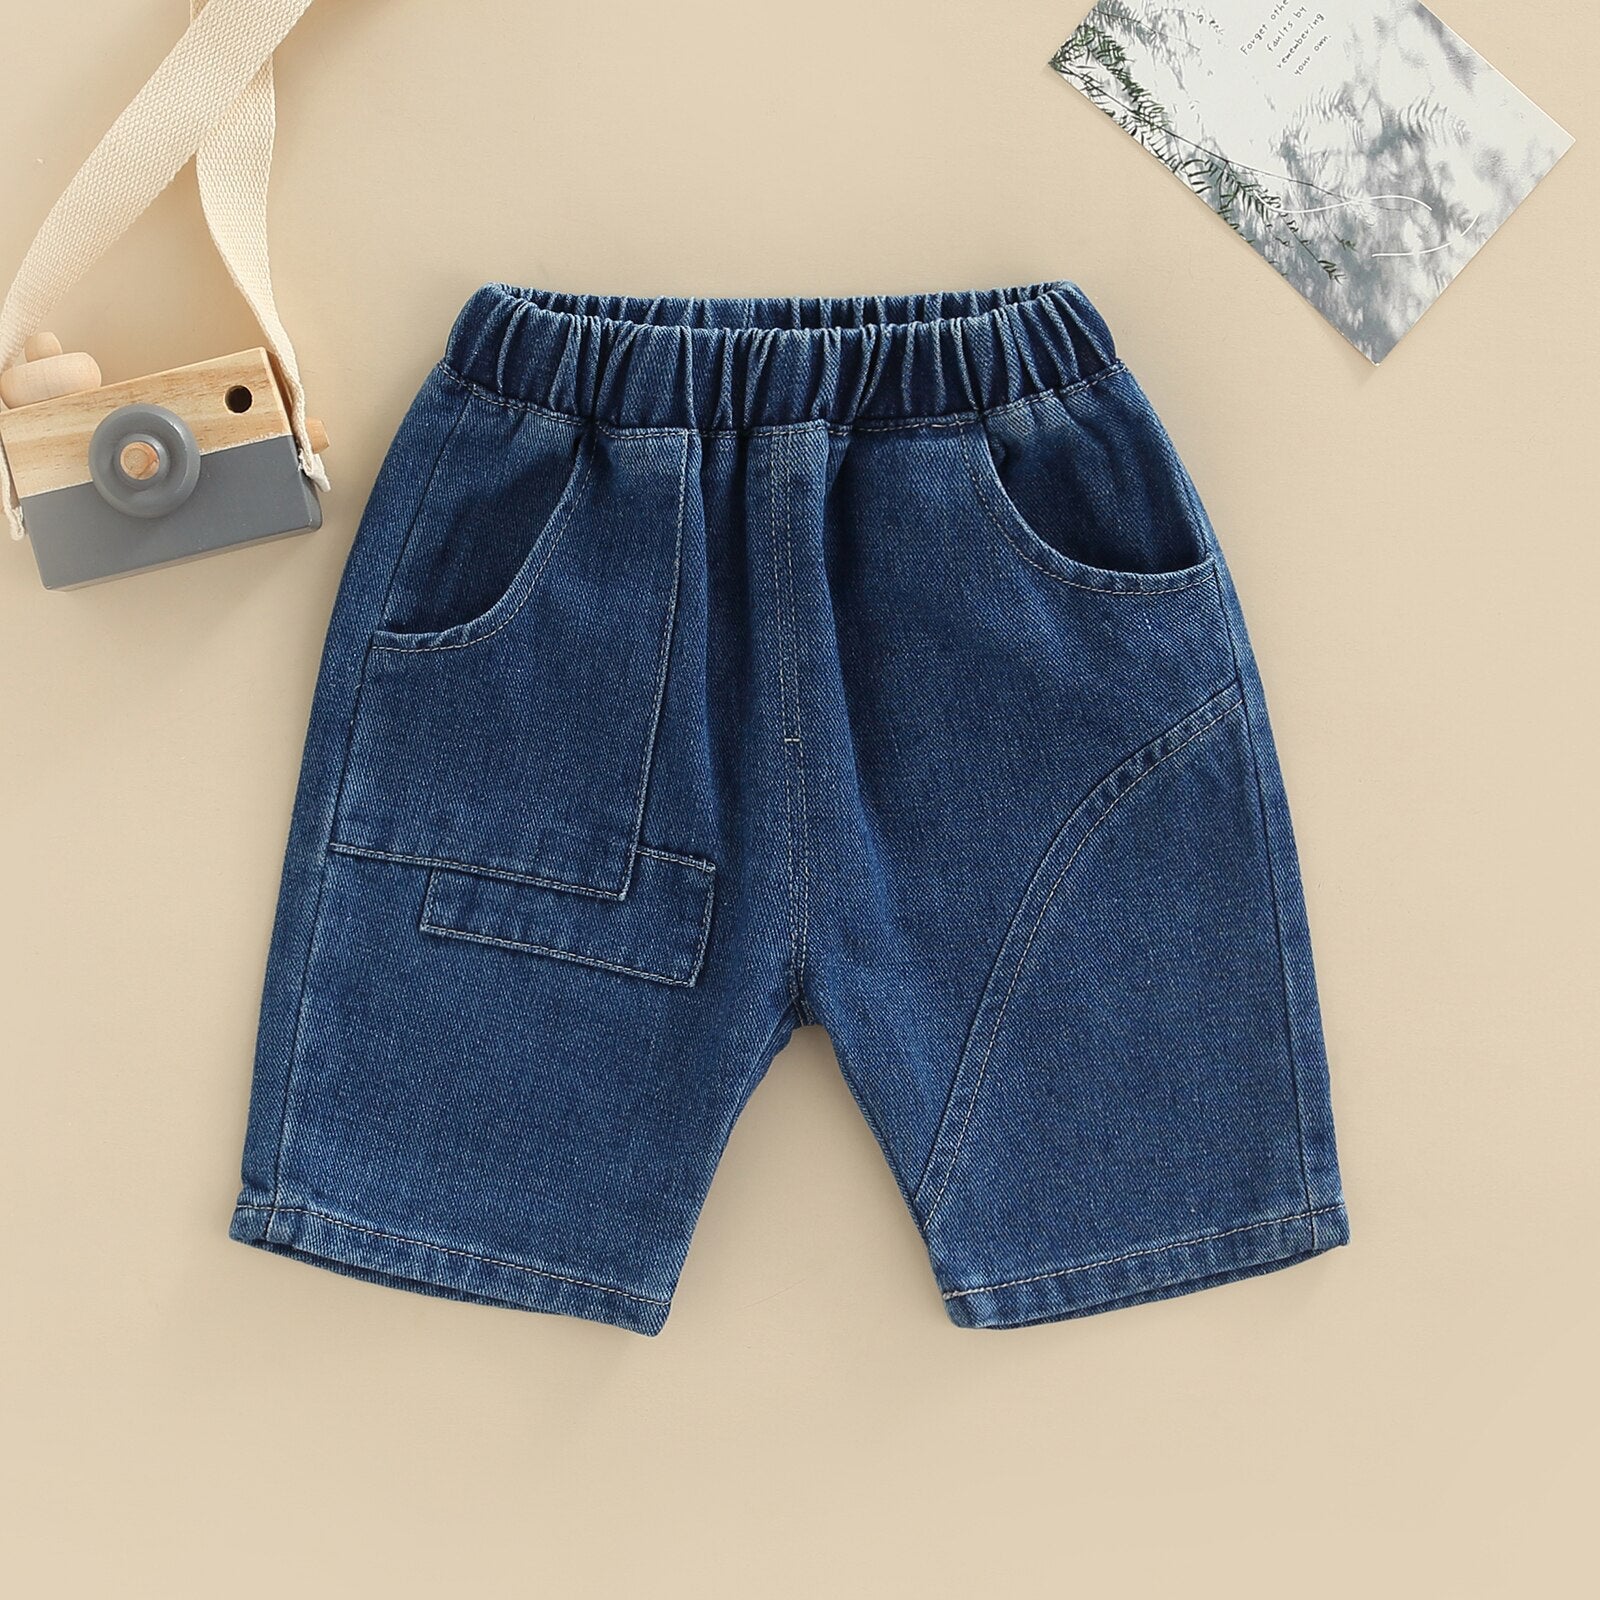 Shorts Infantil Masculino Jeans Bolsos shorts Loja Click Certo Jeans 18-24 meses 